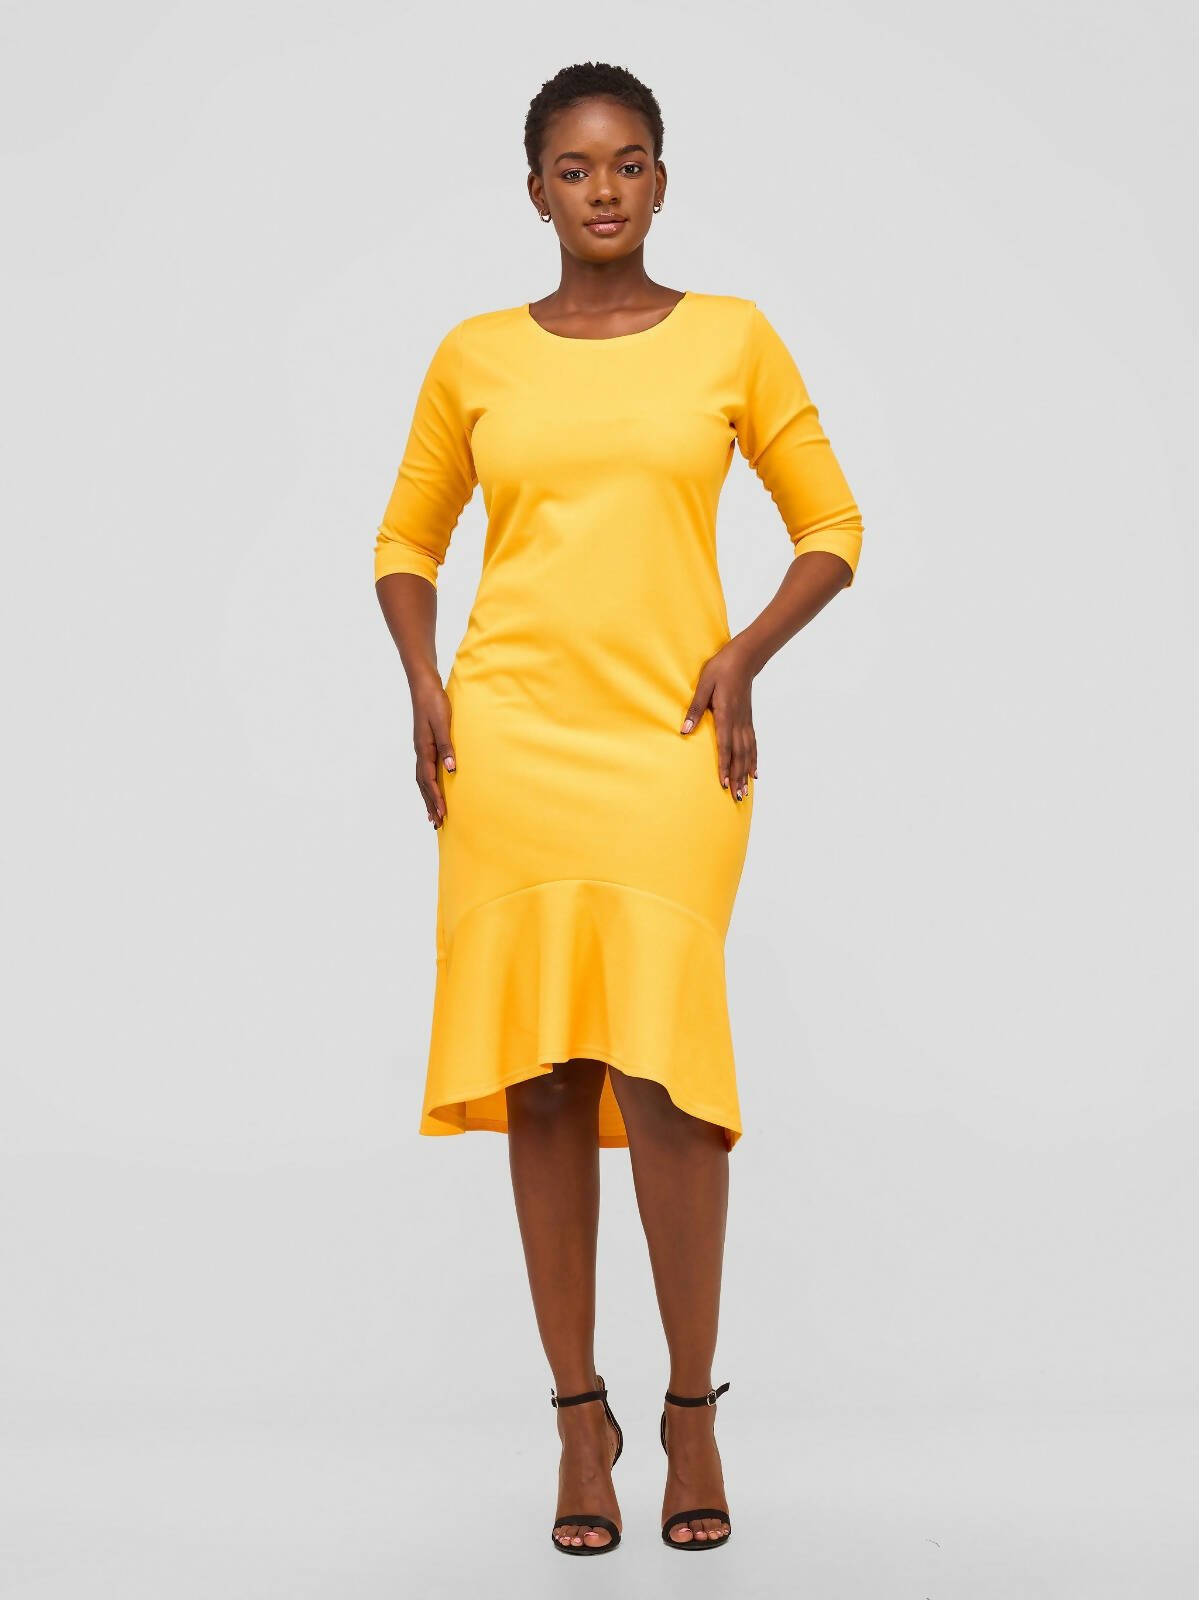 Timyt Urban Wear Corporate Chic Official Wear - Yellow - Shopzetu